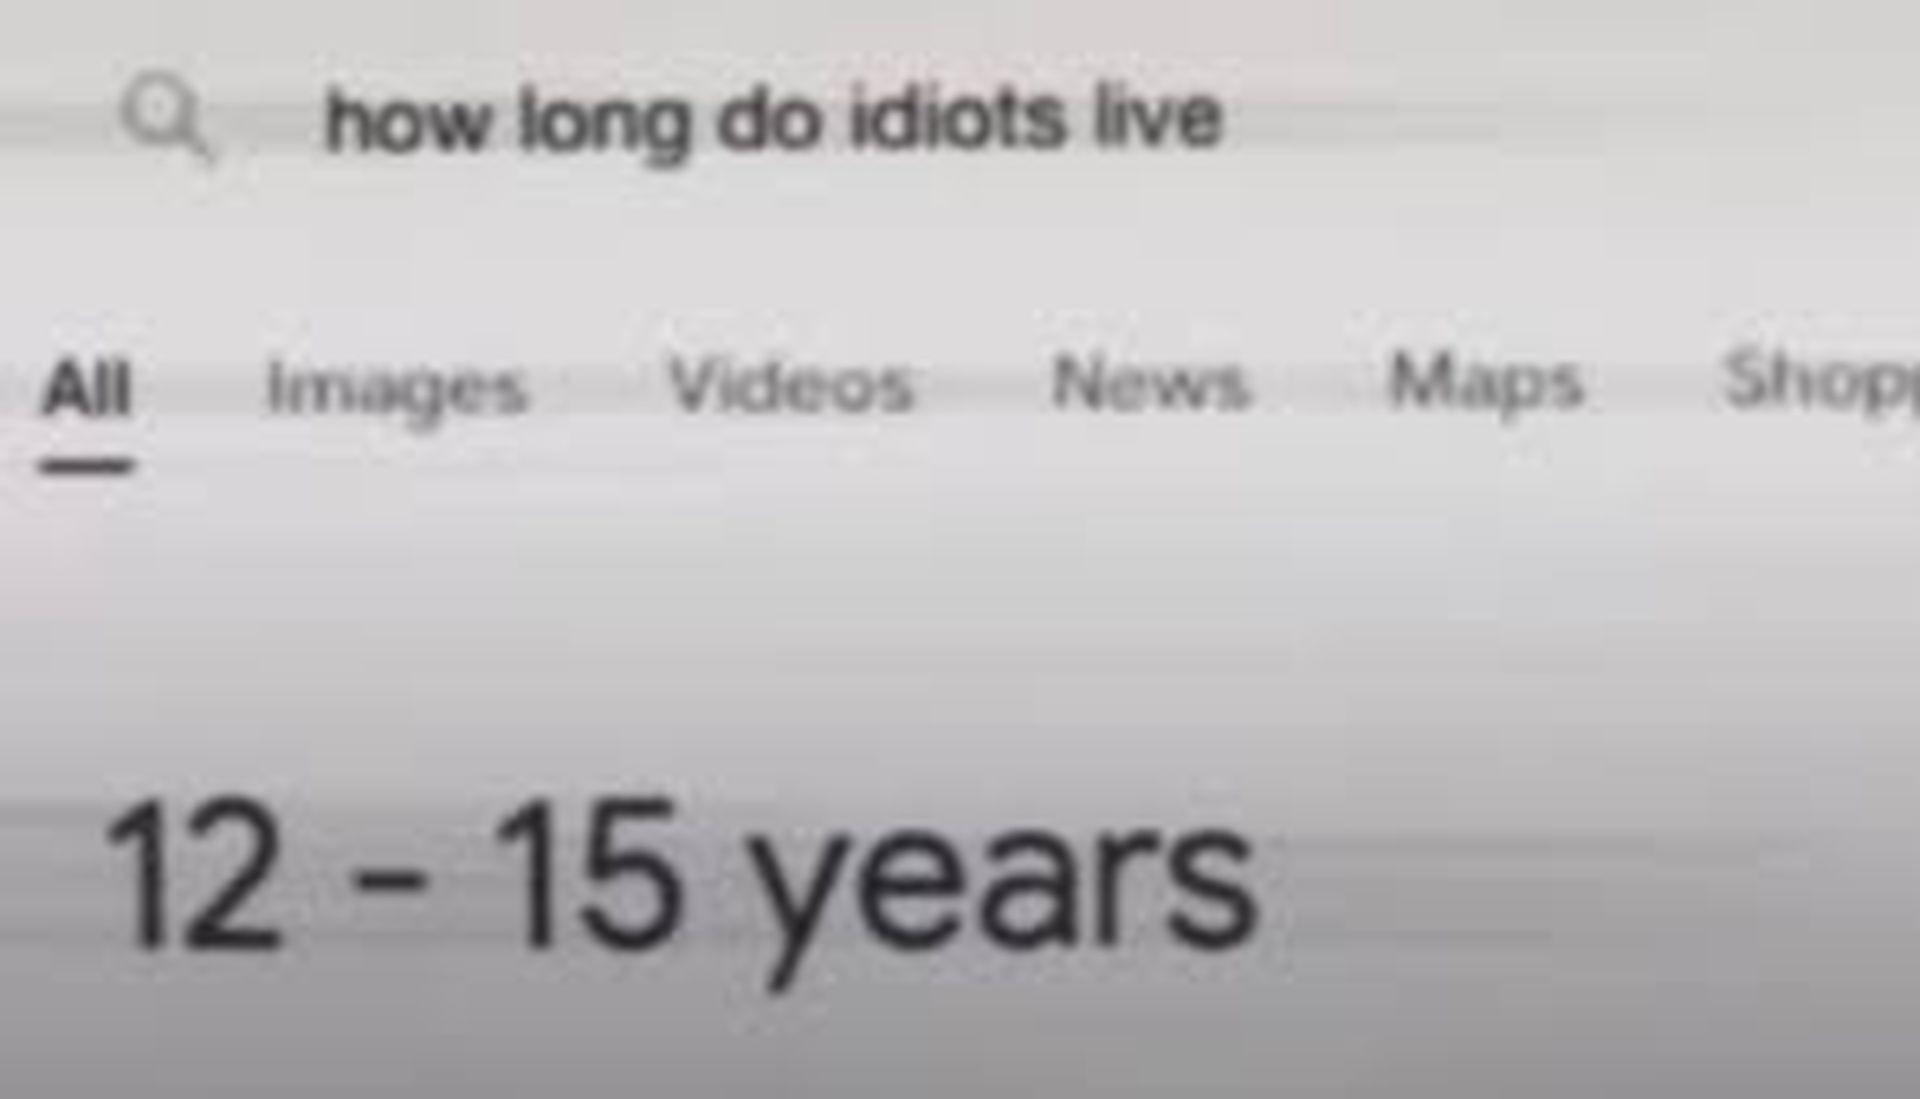 A joke goes viral: How long do idiots live?